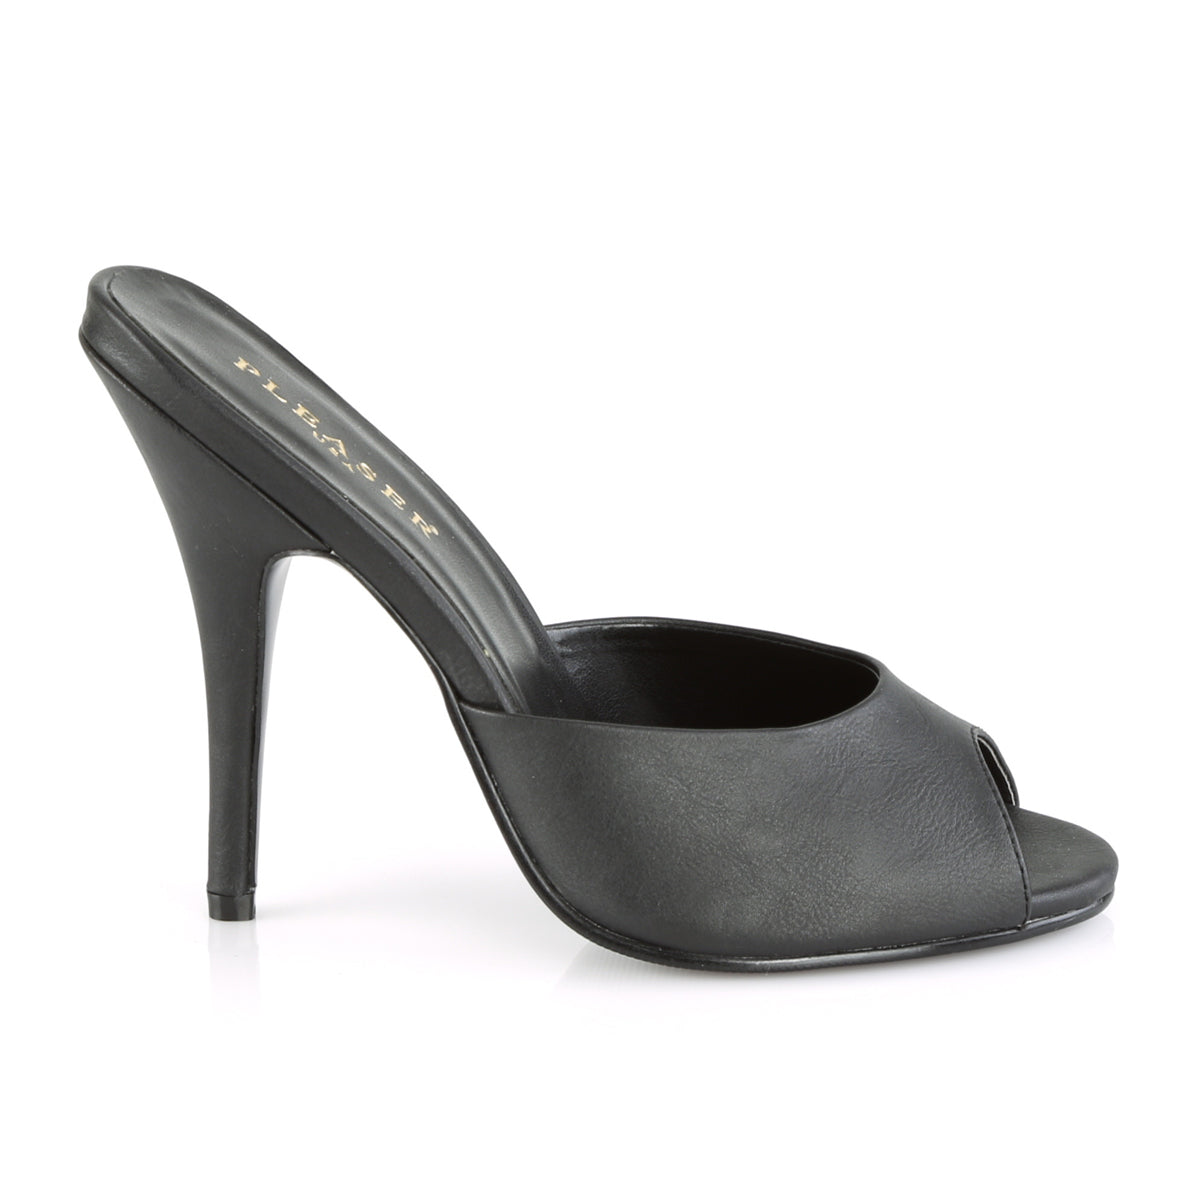 SEDUCE-101 Pleaser Black Faux Leather Single Sole Shoes [Sexy Shoes]